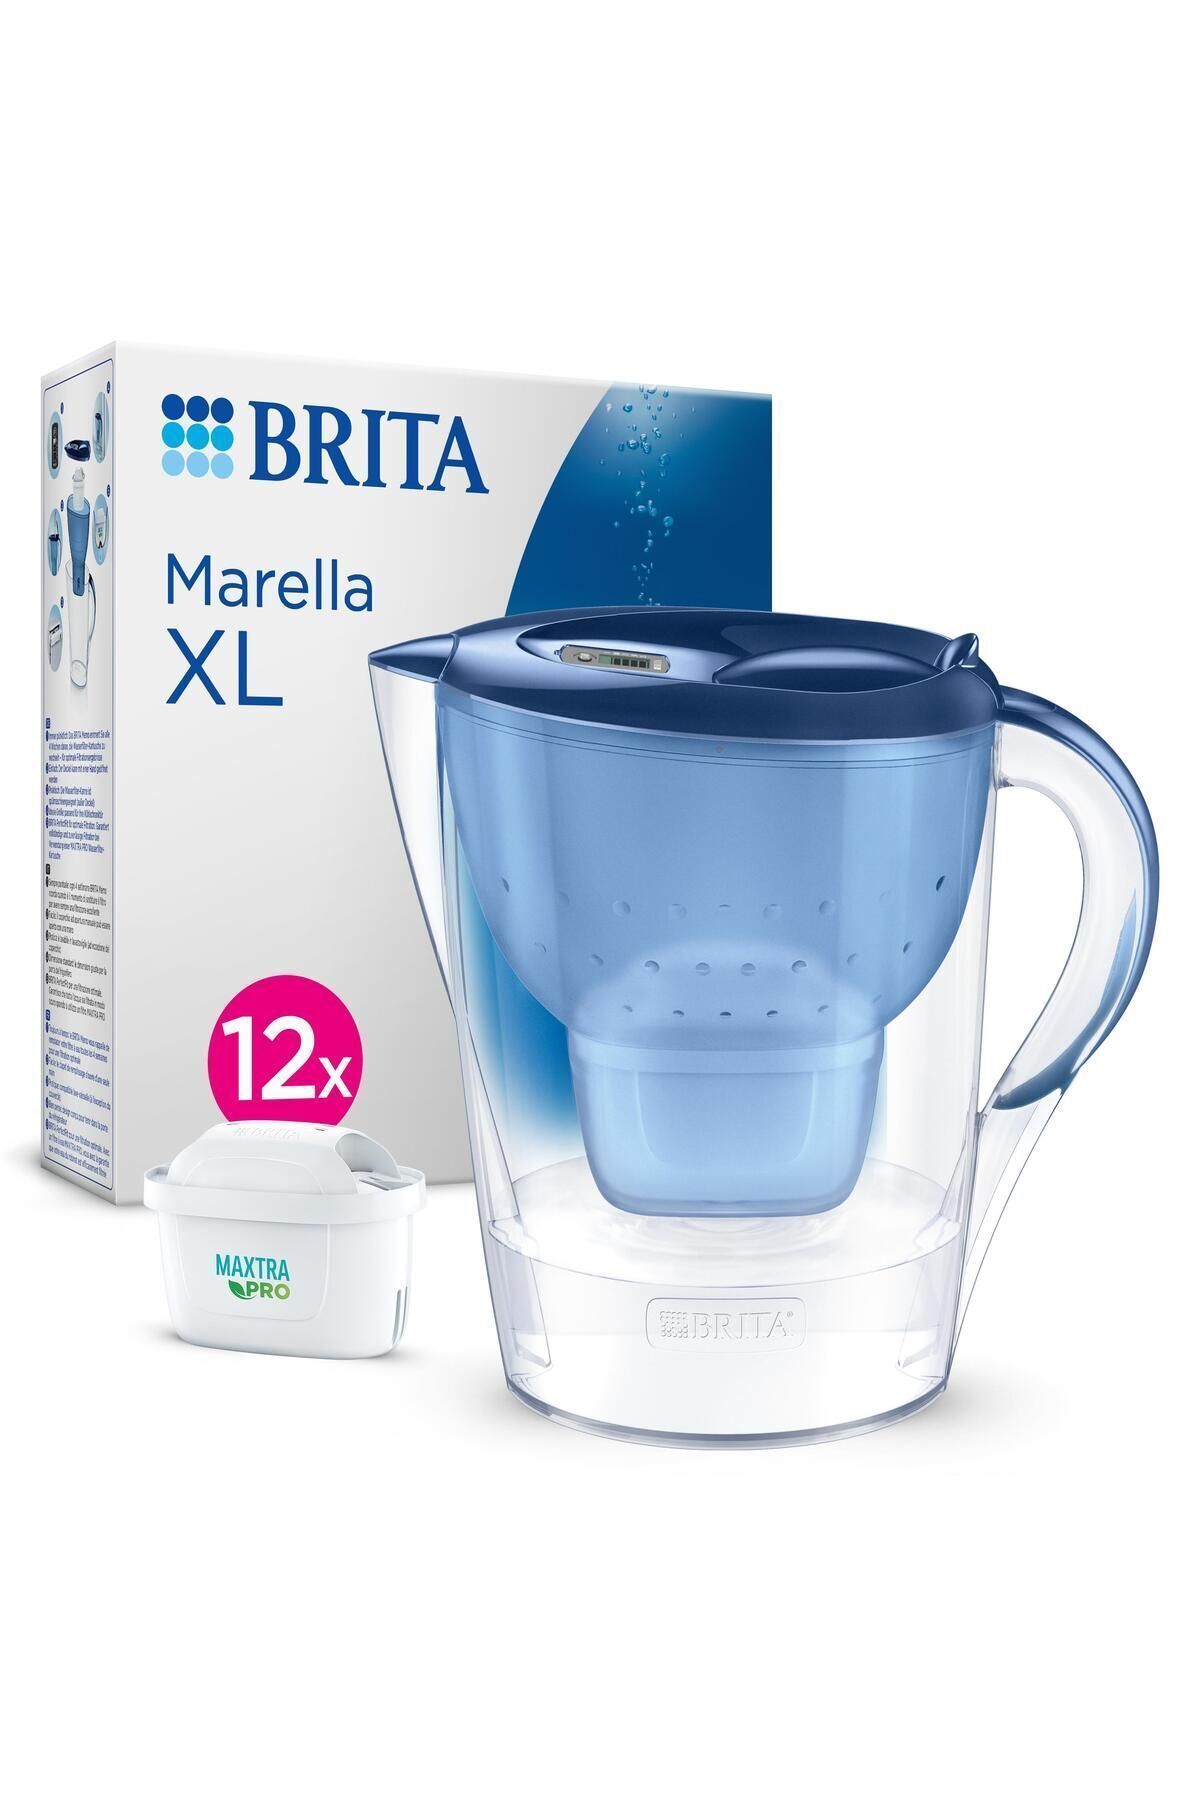 Brita Marella XL 12x Maxtra Pro All-In-1 Filtreli Su Arıtma Sürahisi – Mavi (3,5L)